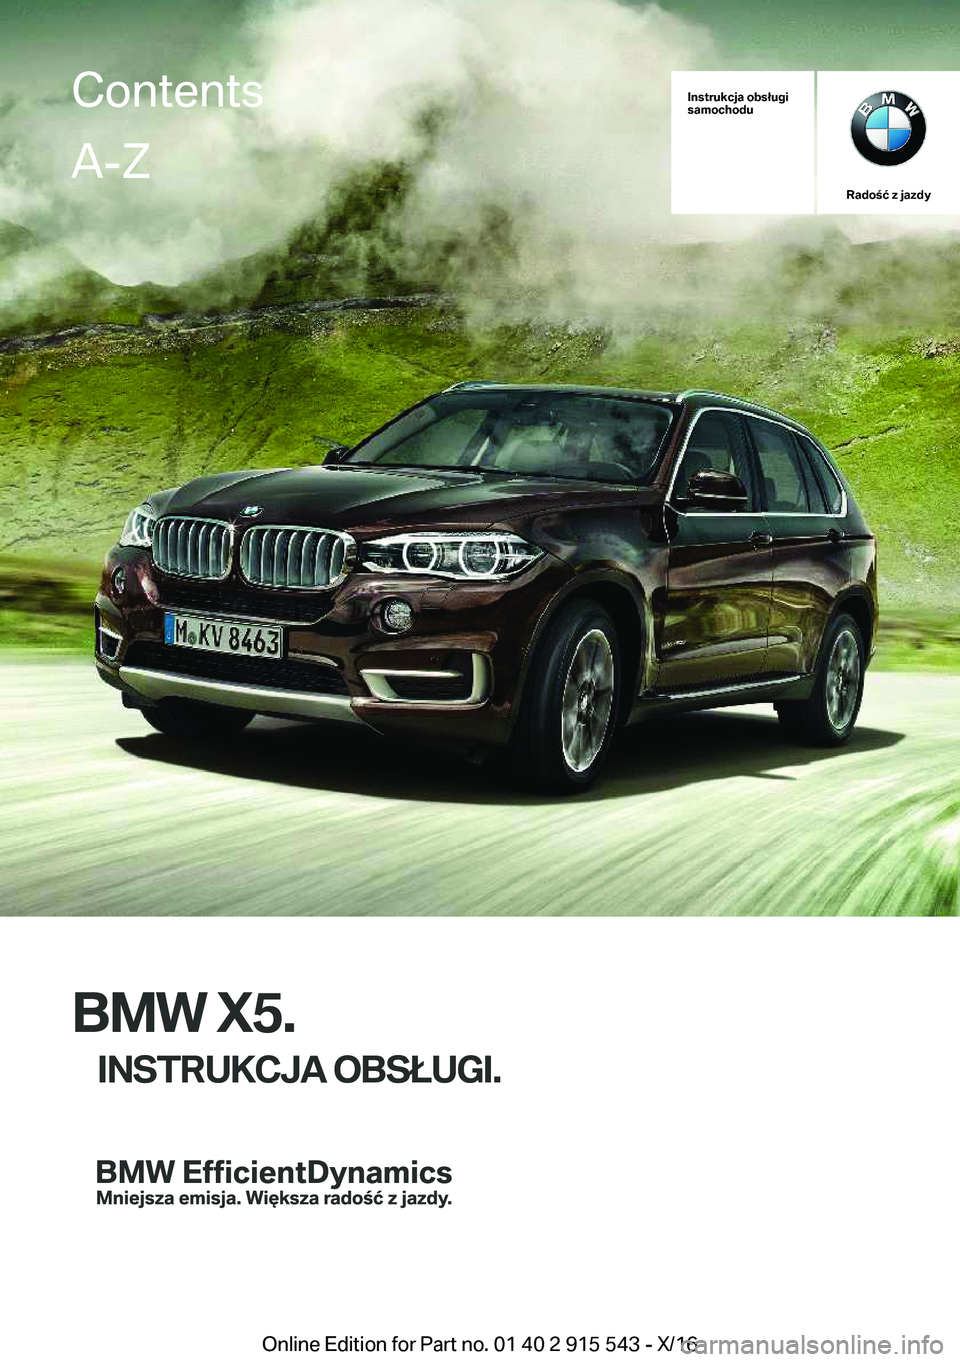 BMW X5 2017  Instrukcja obsługi (in Polish) �I�n�s�t�r�u�k�c�j�a��o�b�s�ł�u�g�i
�s�a�m�o�c�h�o�d�u
�R�a�d�o�